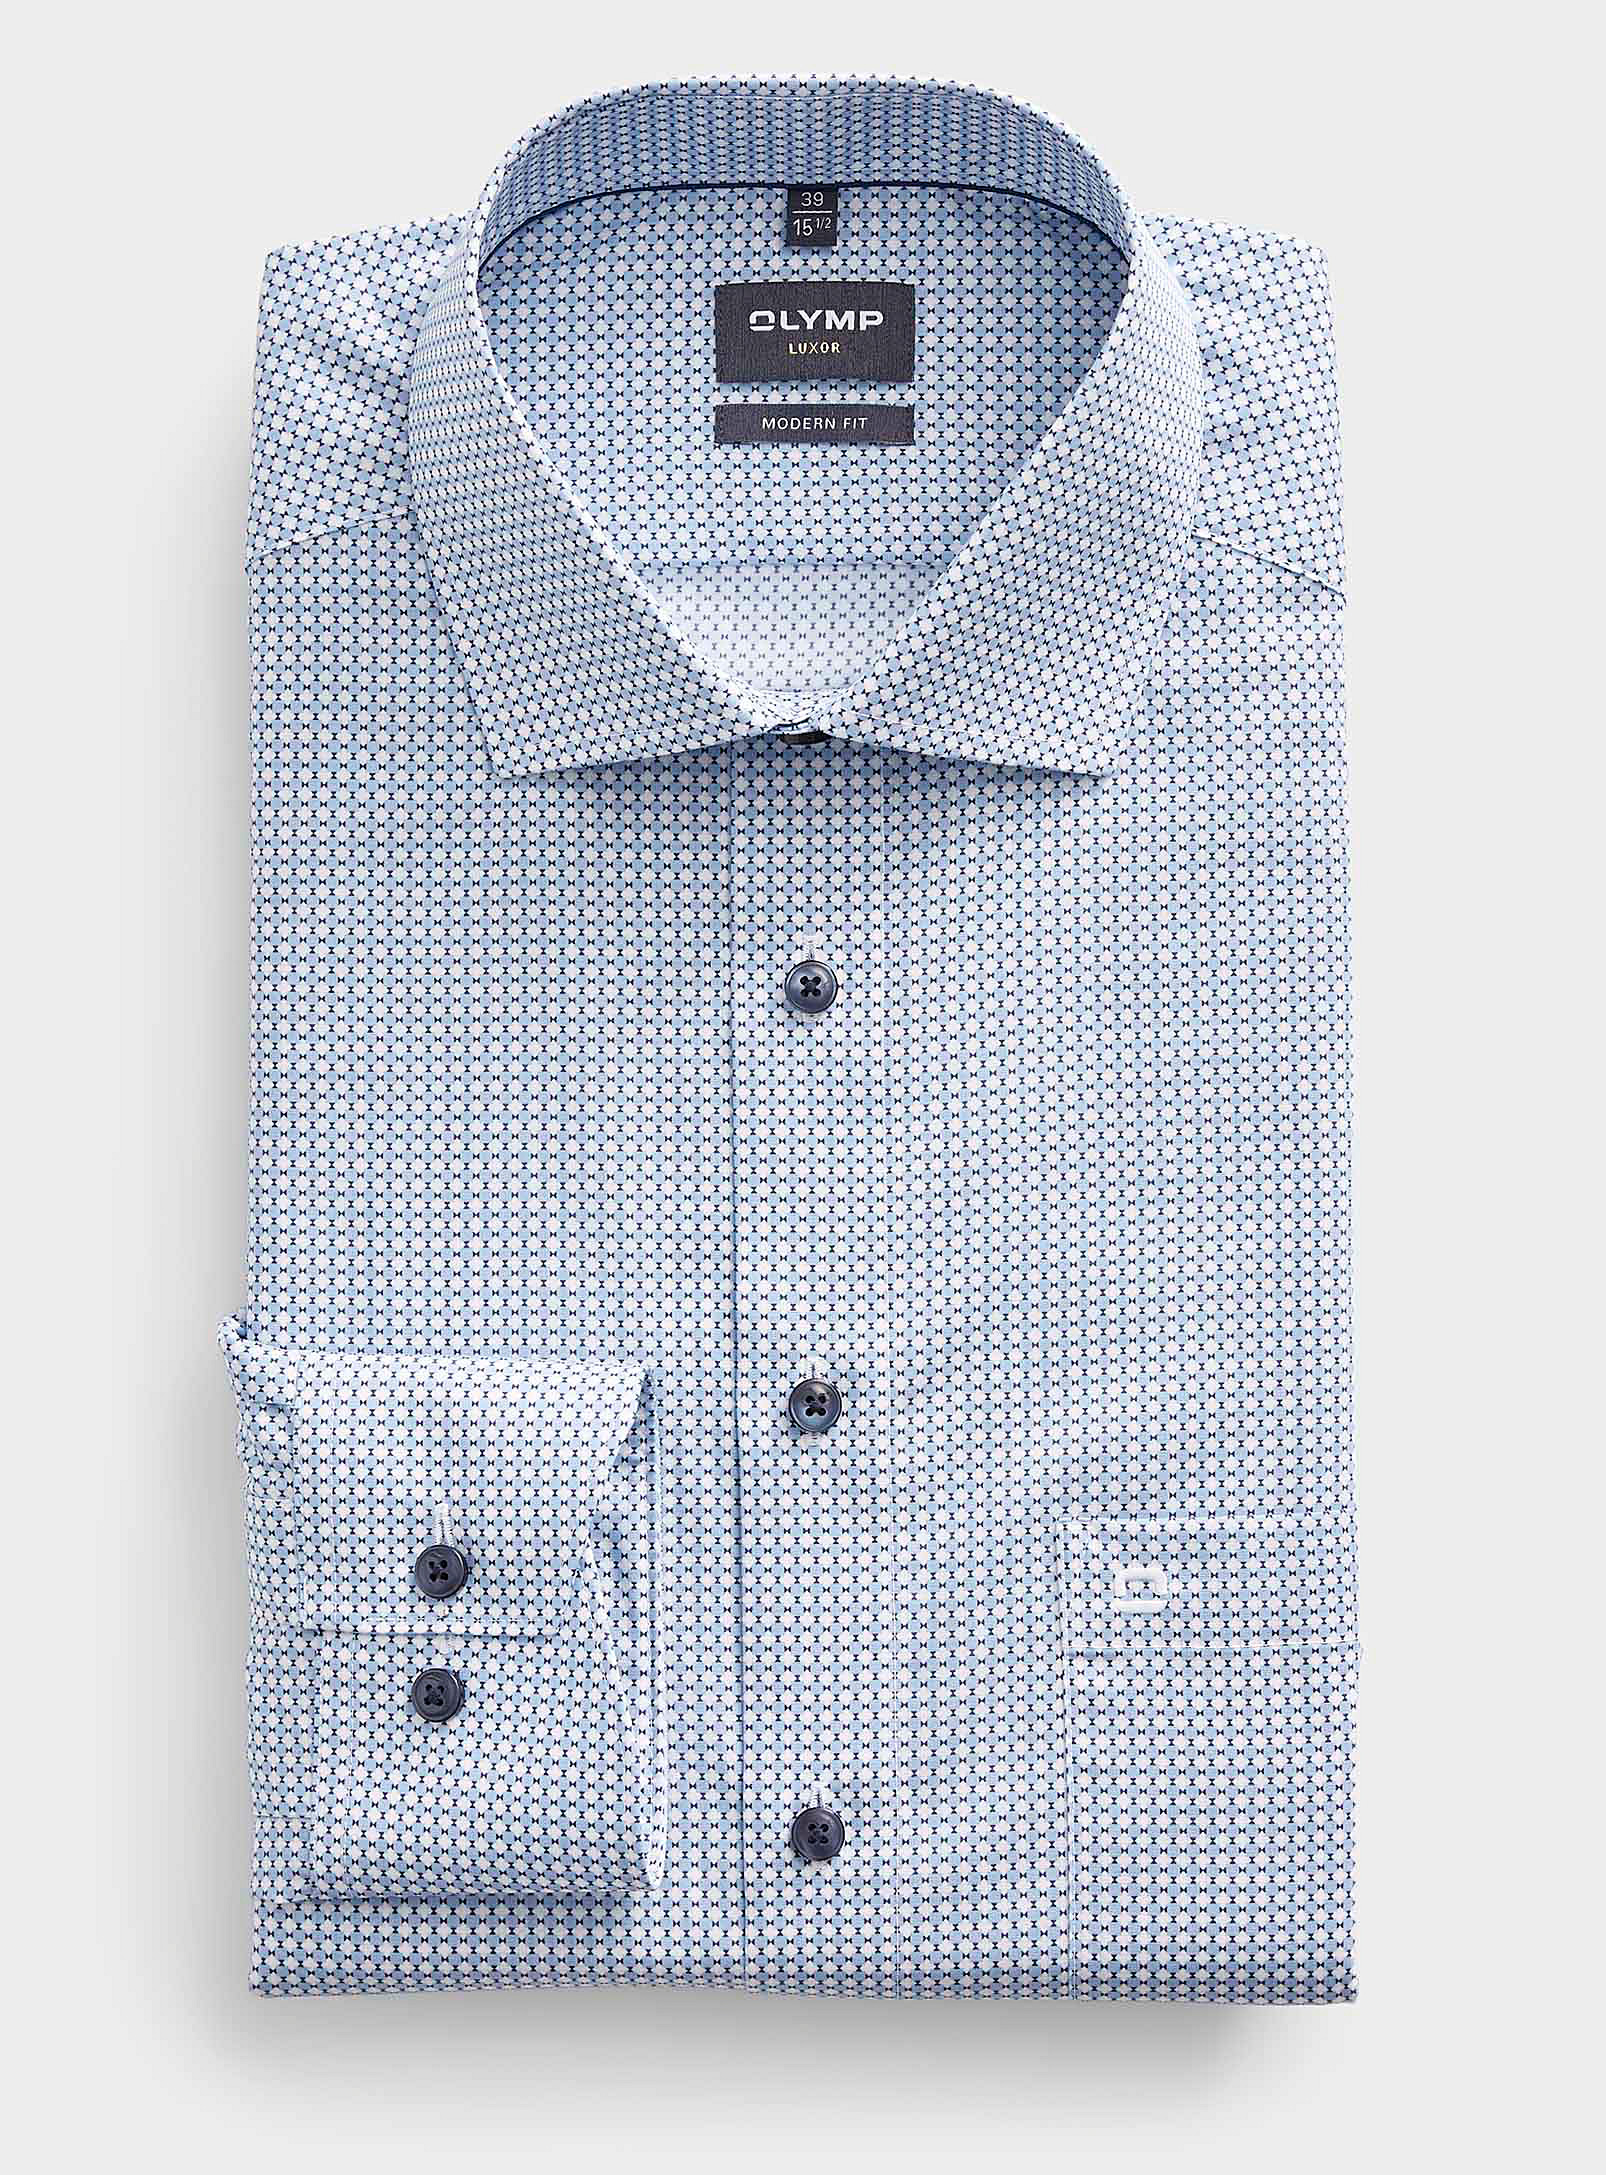 Olymp - Men's Blue geometric dot shirt Comfort fit